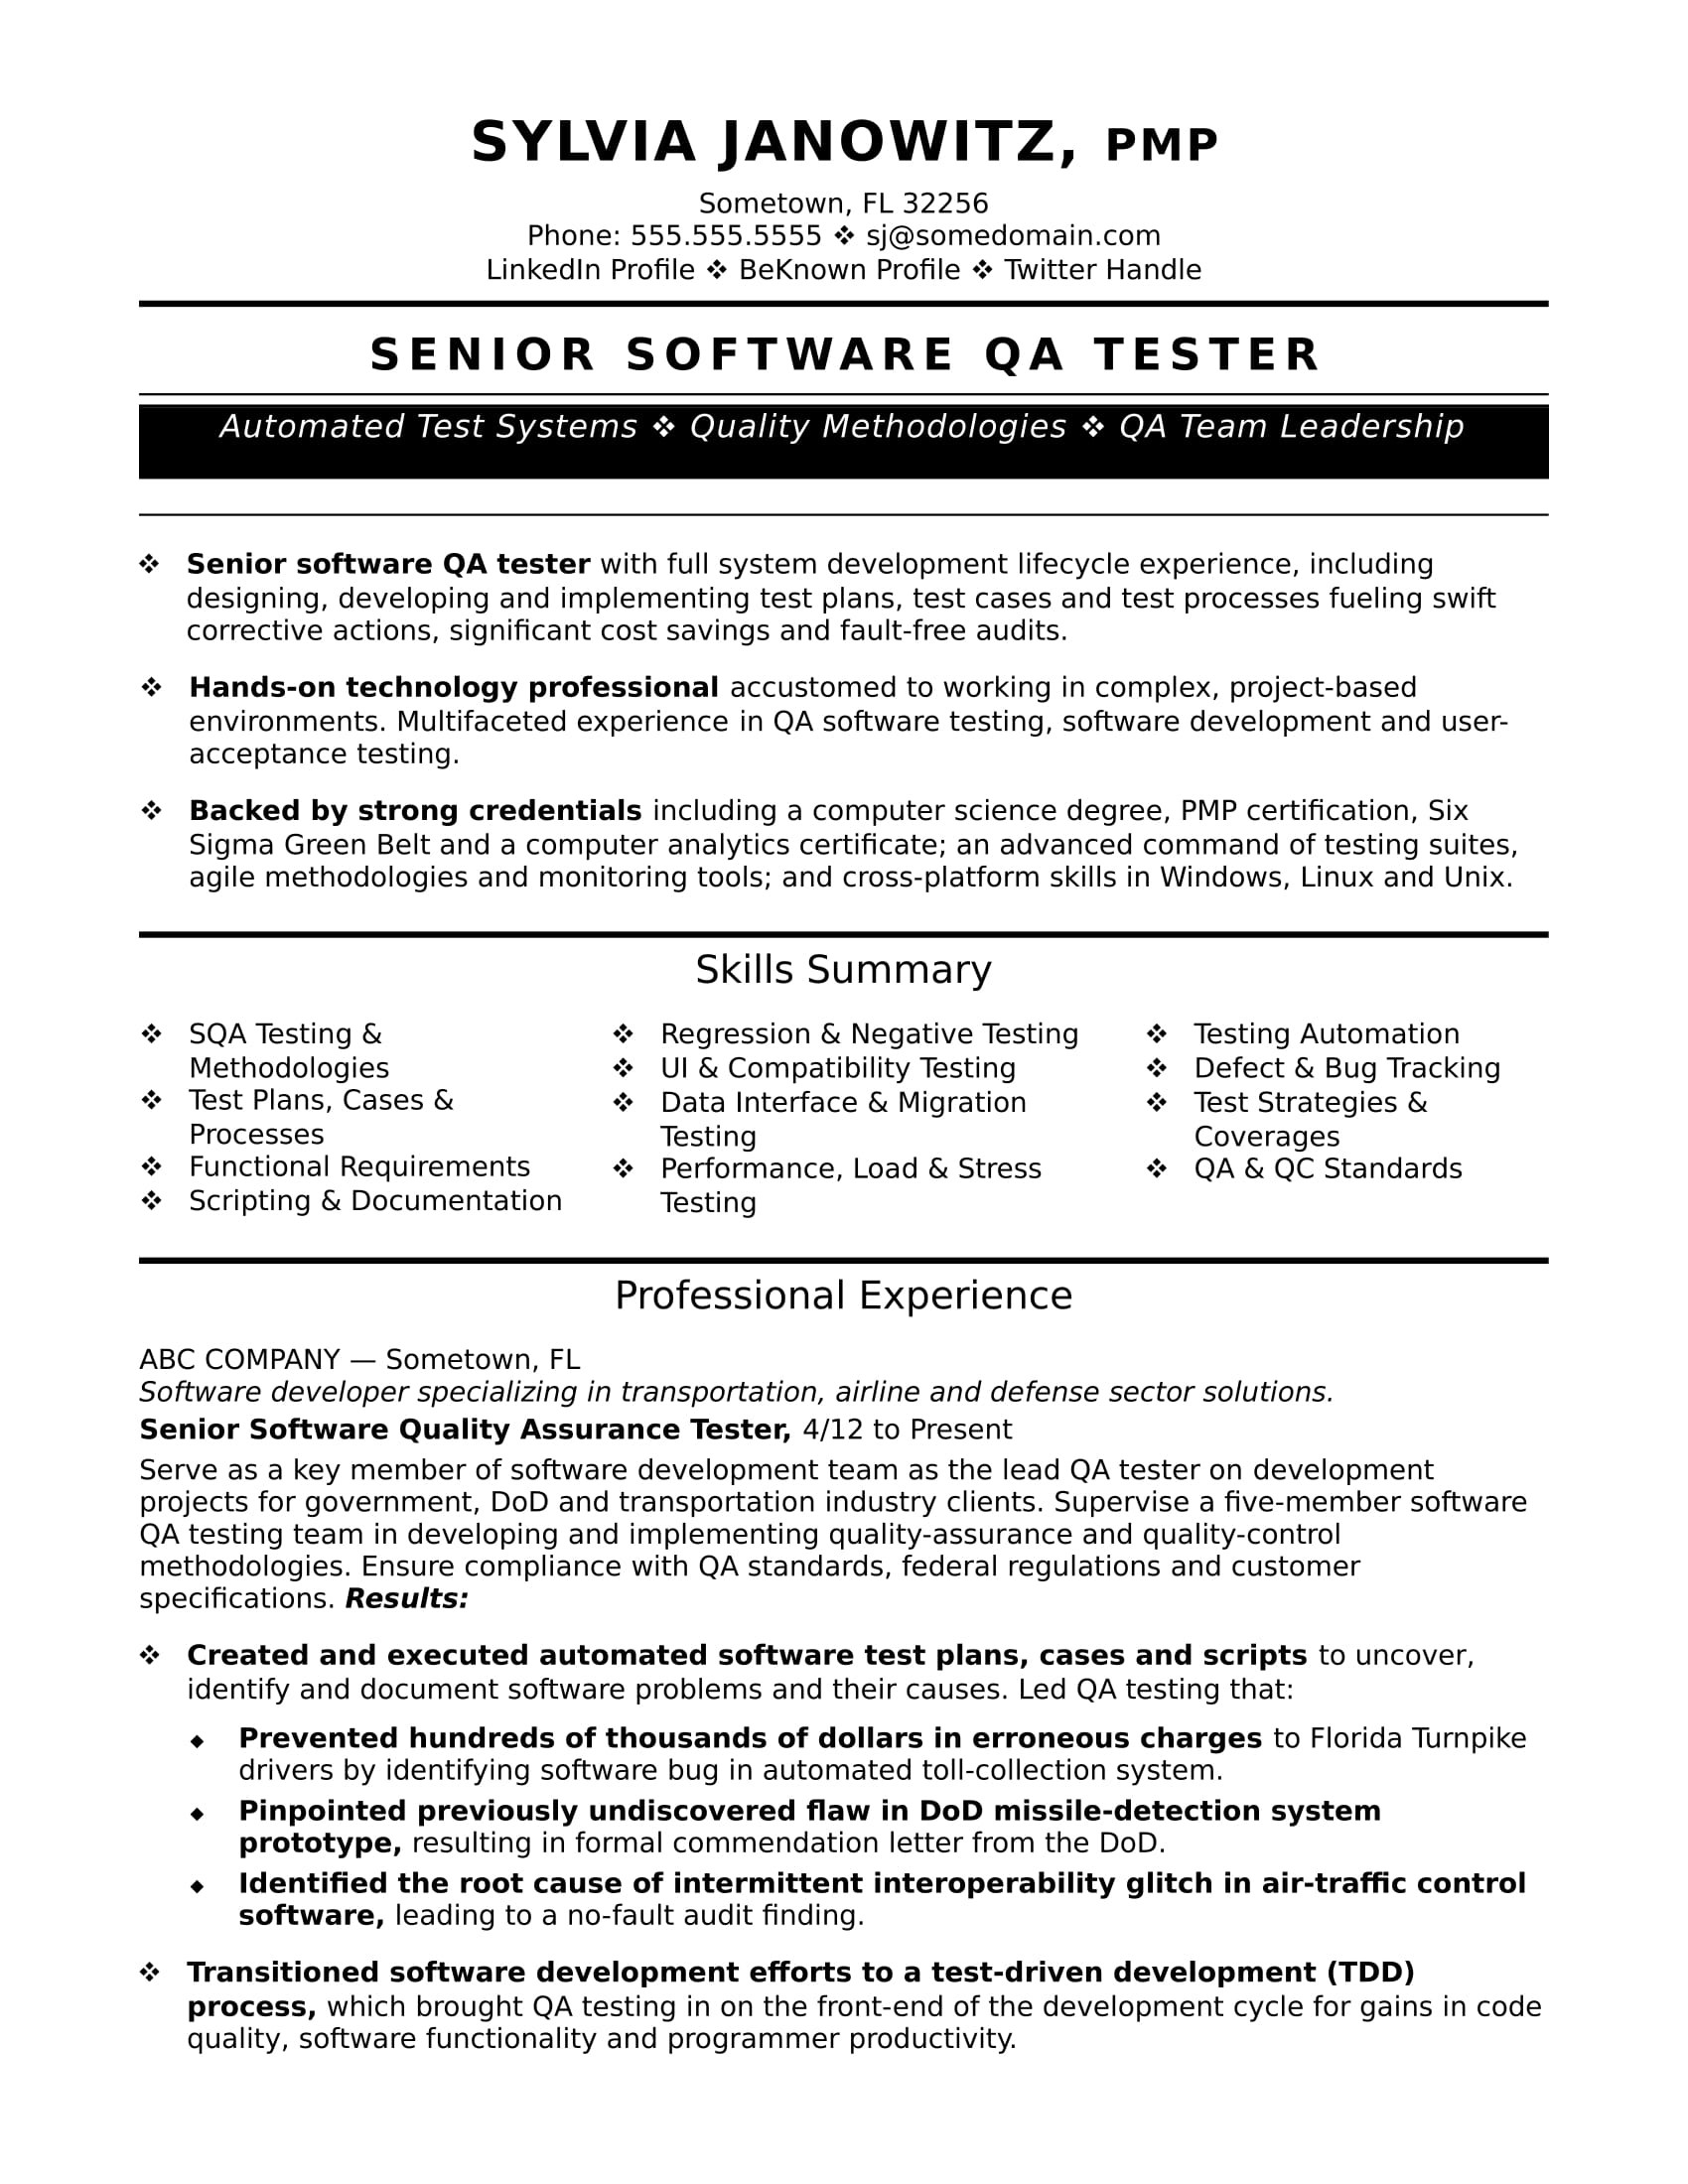 Software Testing Resume Samples for 6 Years Experience Experienced Qa software Tester Resume Sample Monster.com